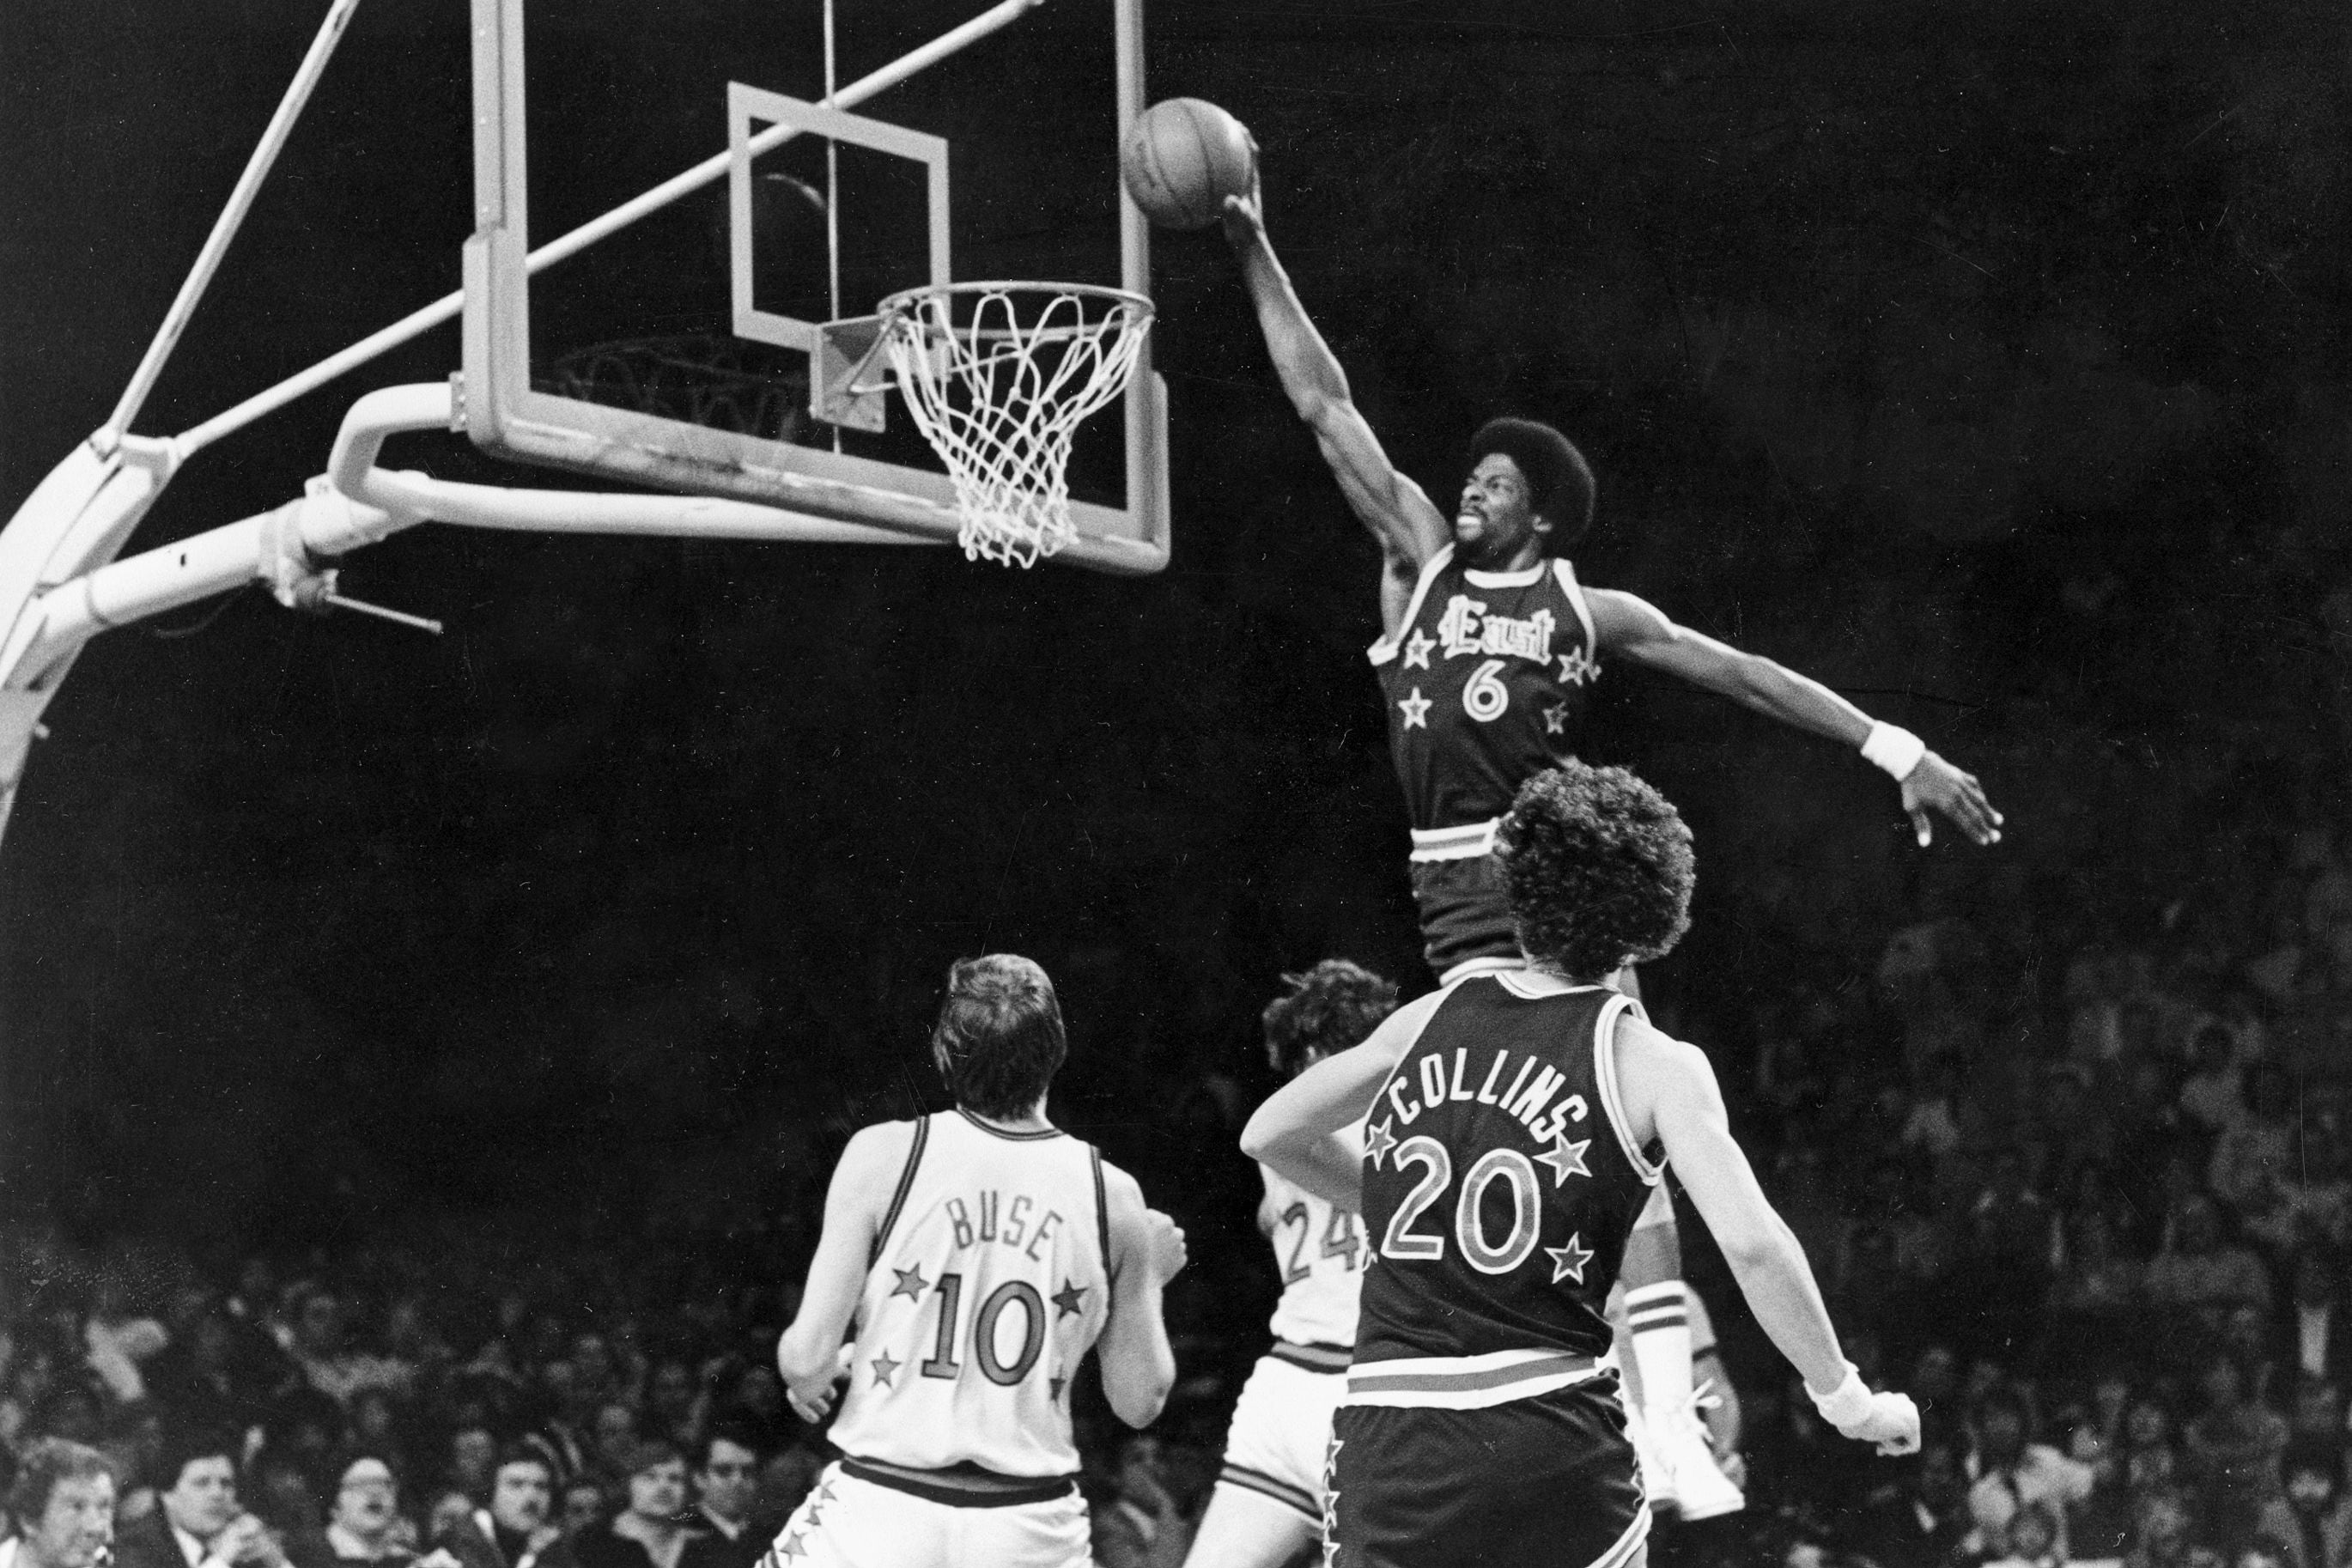 WATCH: Celtics legend Larry Bird's All-Star 3-point contest wins